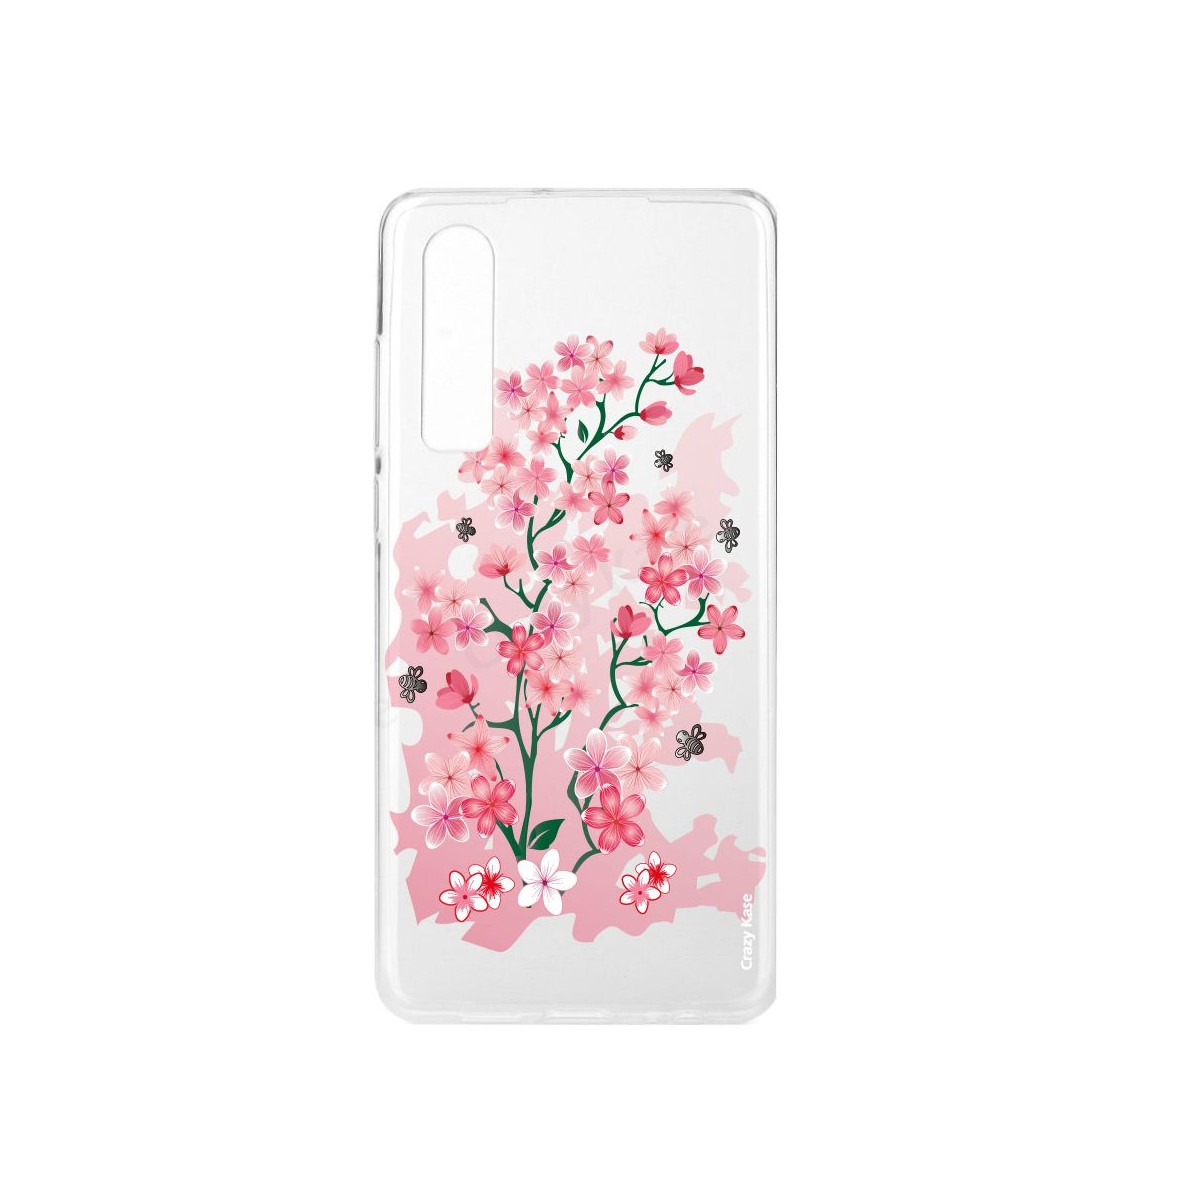 Coque Galaxy A7 (2018) souple motif Fleurs de Cerisier - Crazy Kase